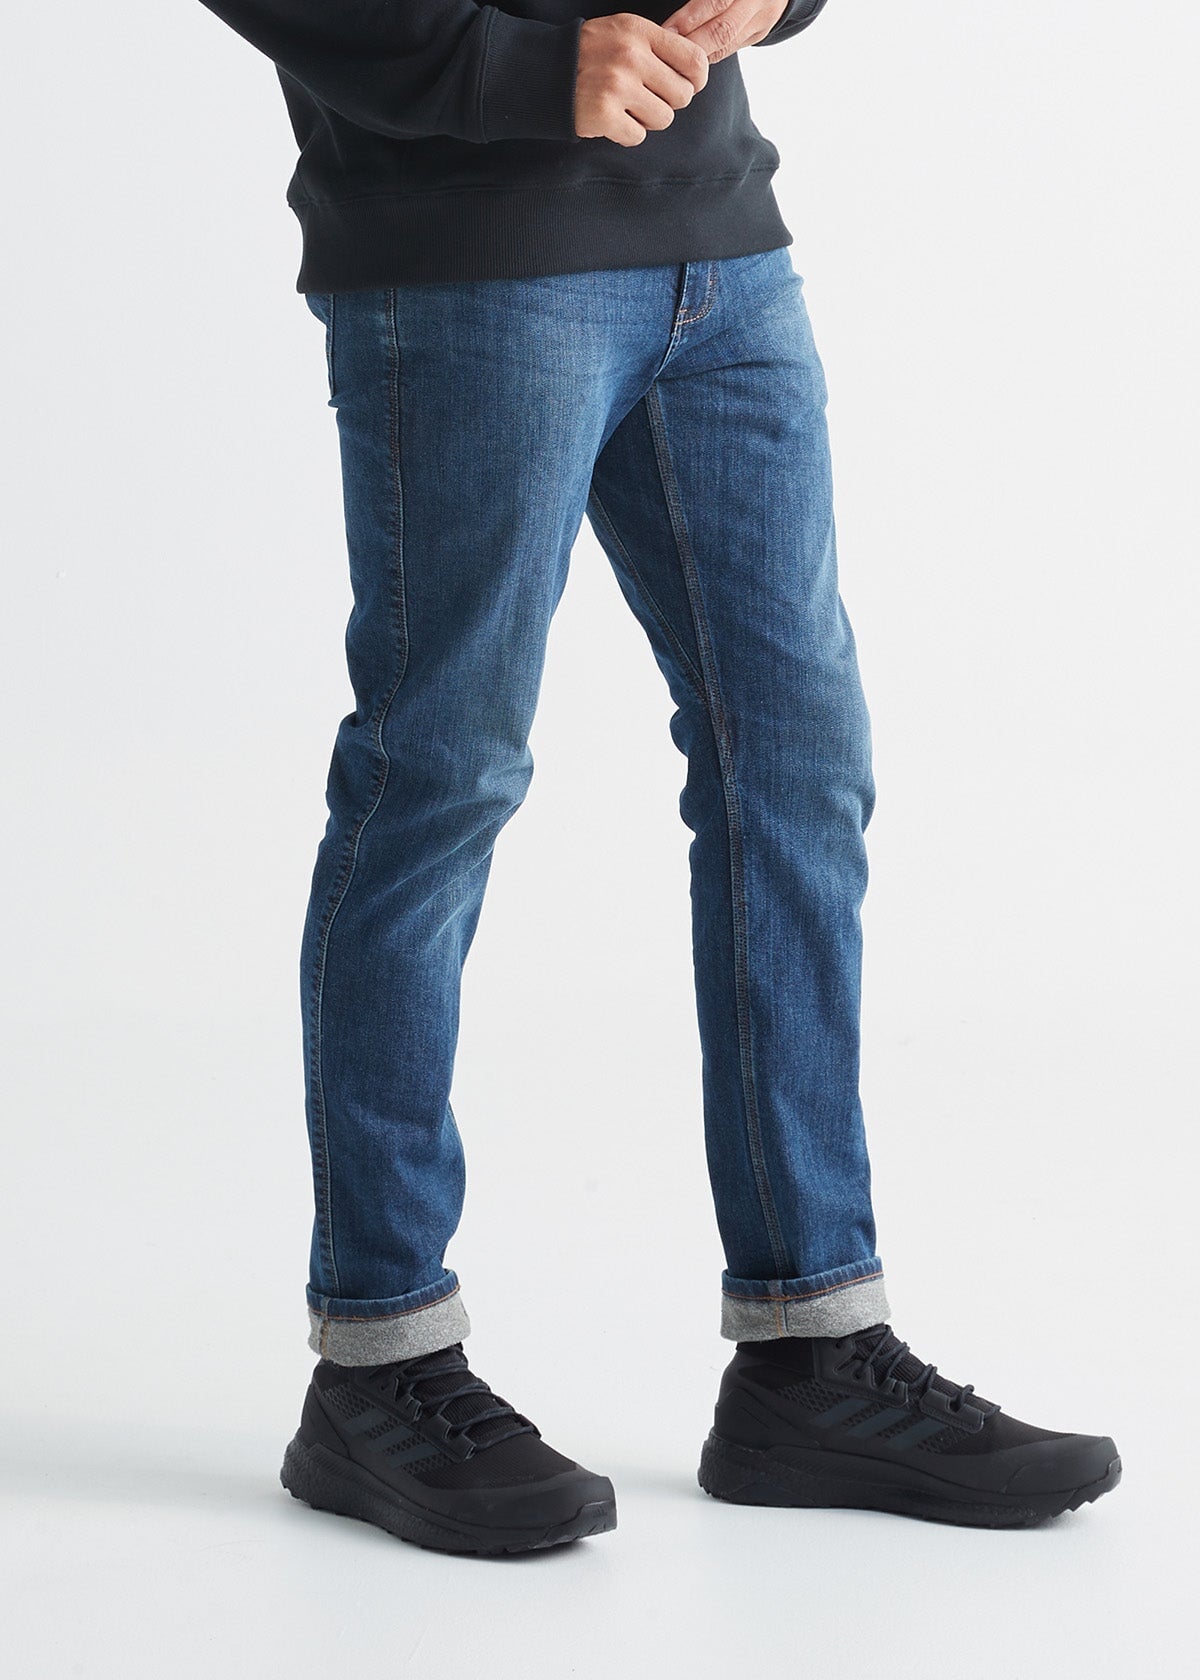 DUER Weatherproof Denim - Our Favorite Jeans Just Got Better - Engearment